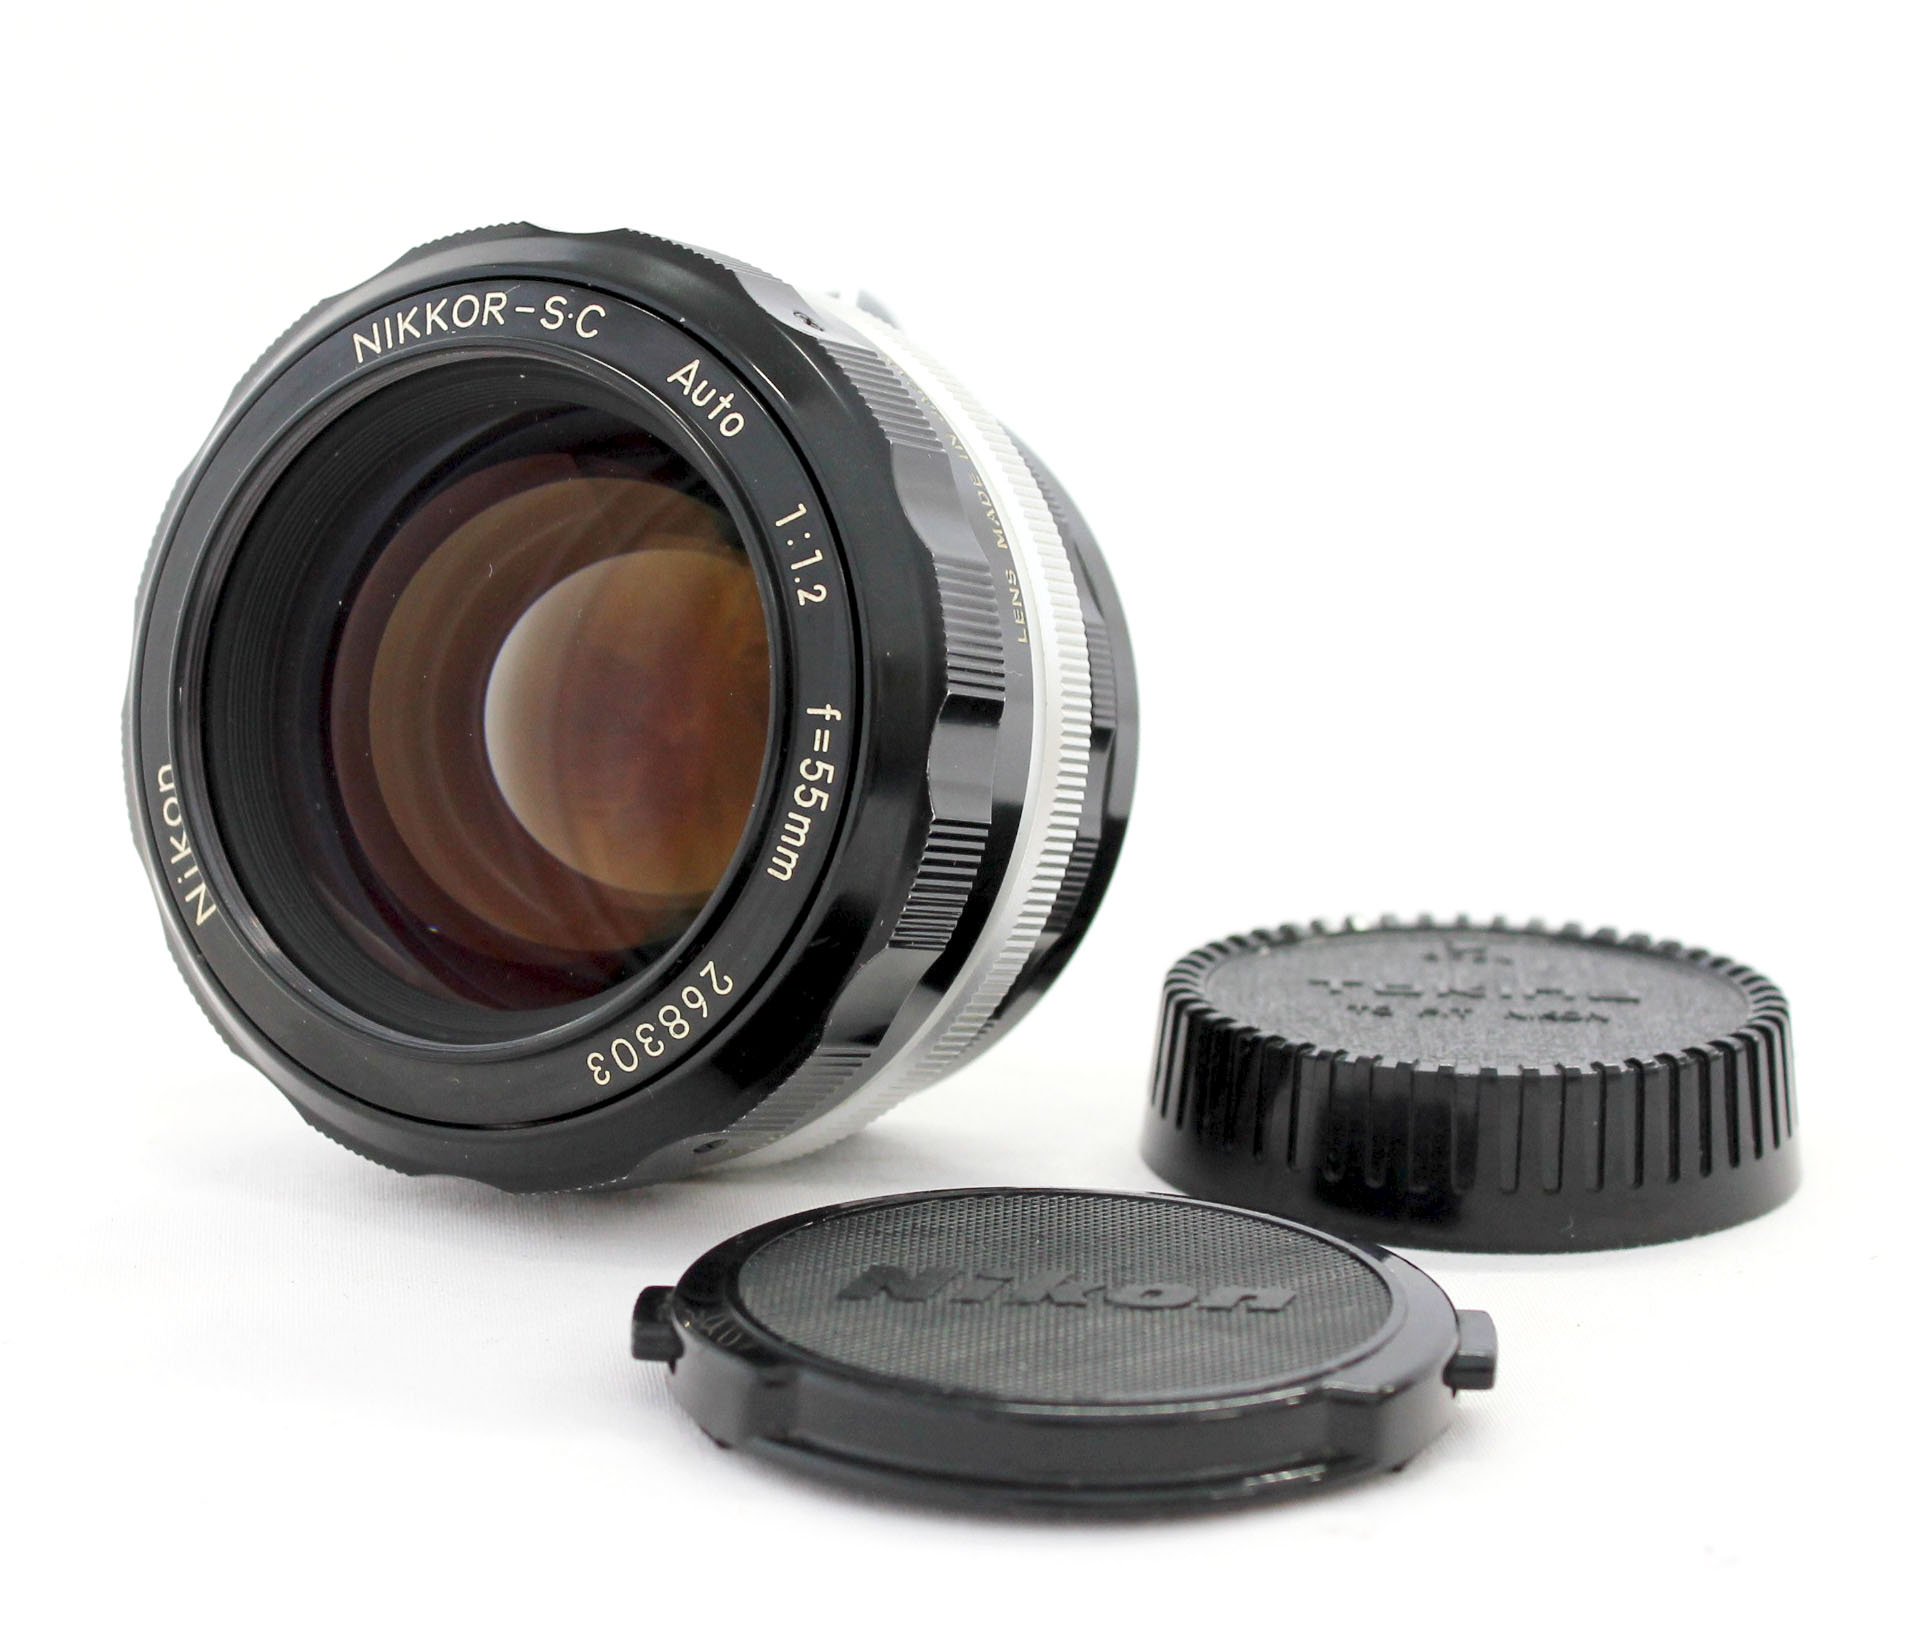 [Excellent++++] Nikon Nikkor S.C SC Auto 55mm F/1.2 Non-Ai MF Prime Lens from Japan